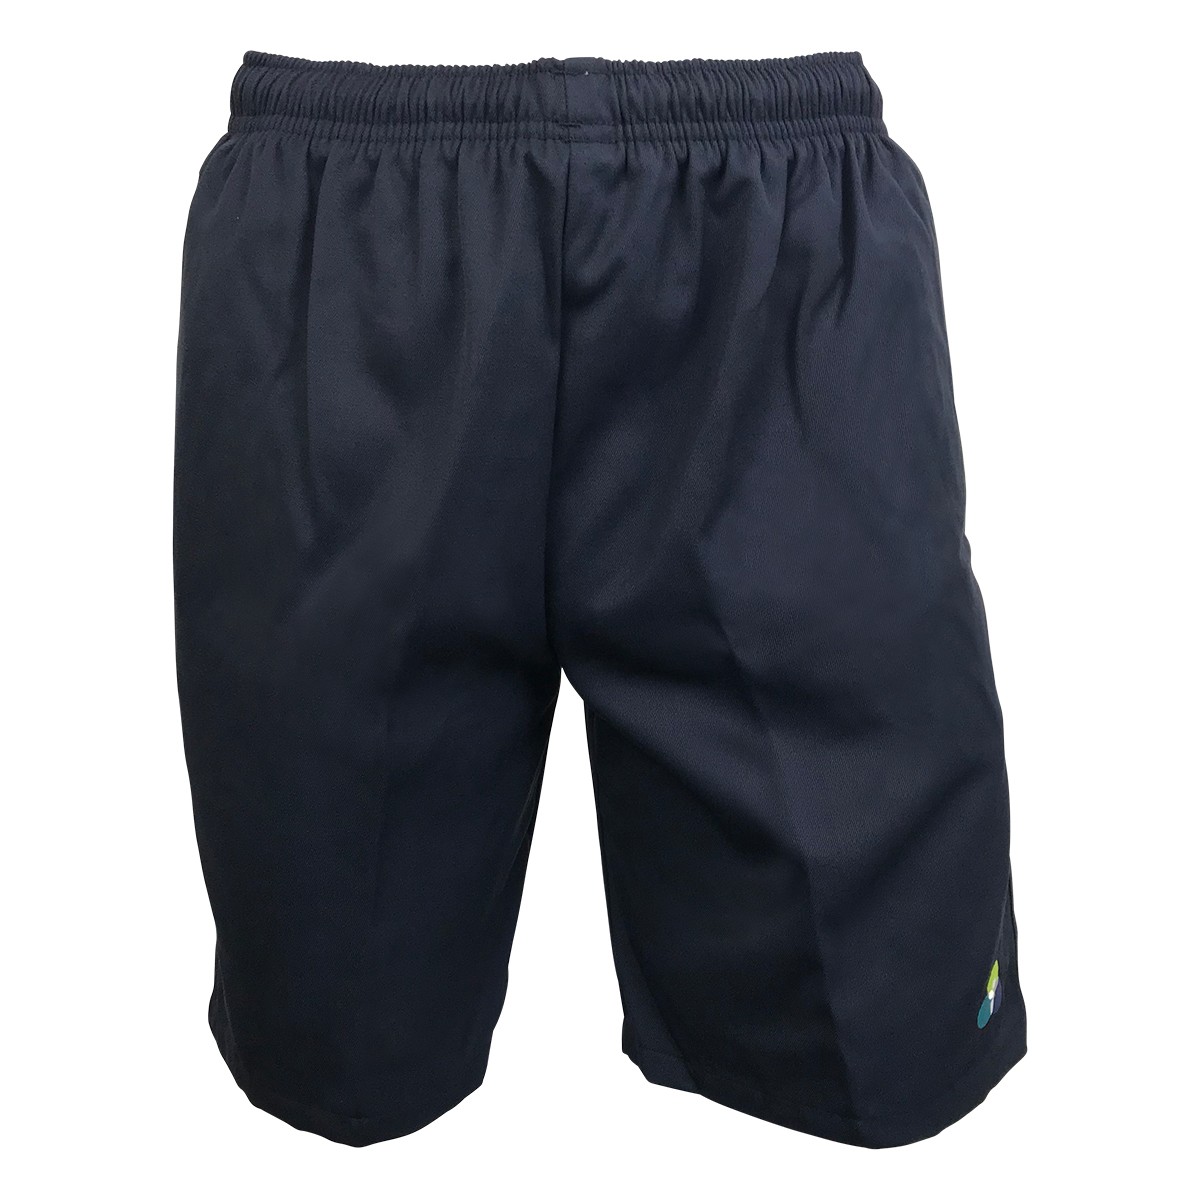 Boys Primary Shorts - School Locker